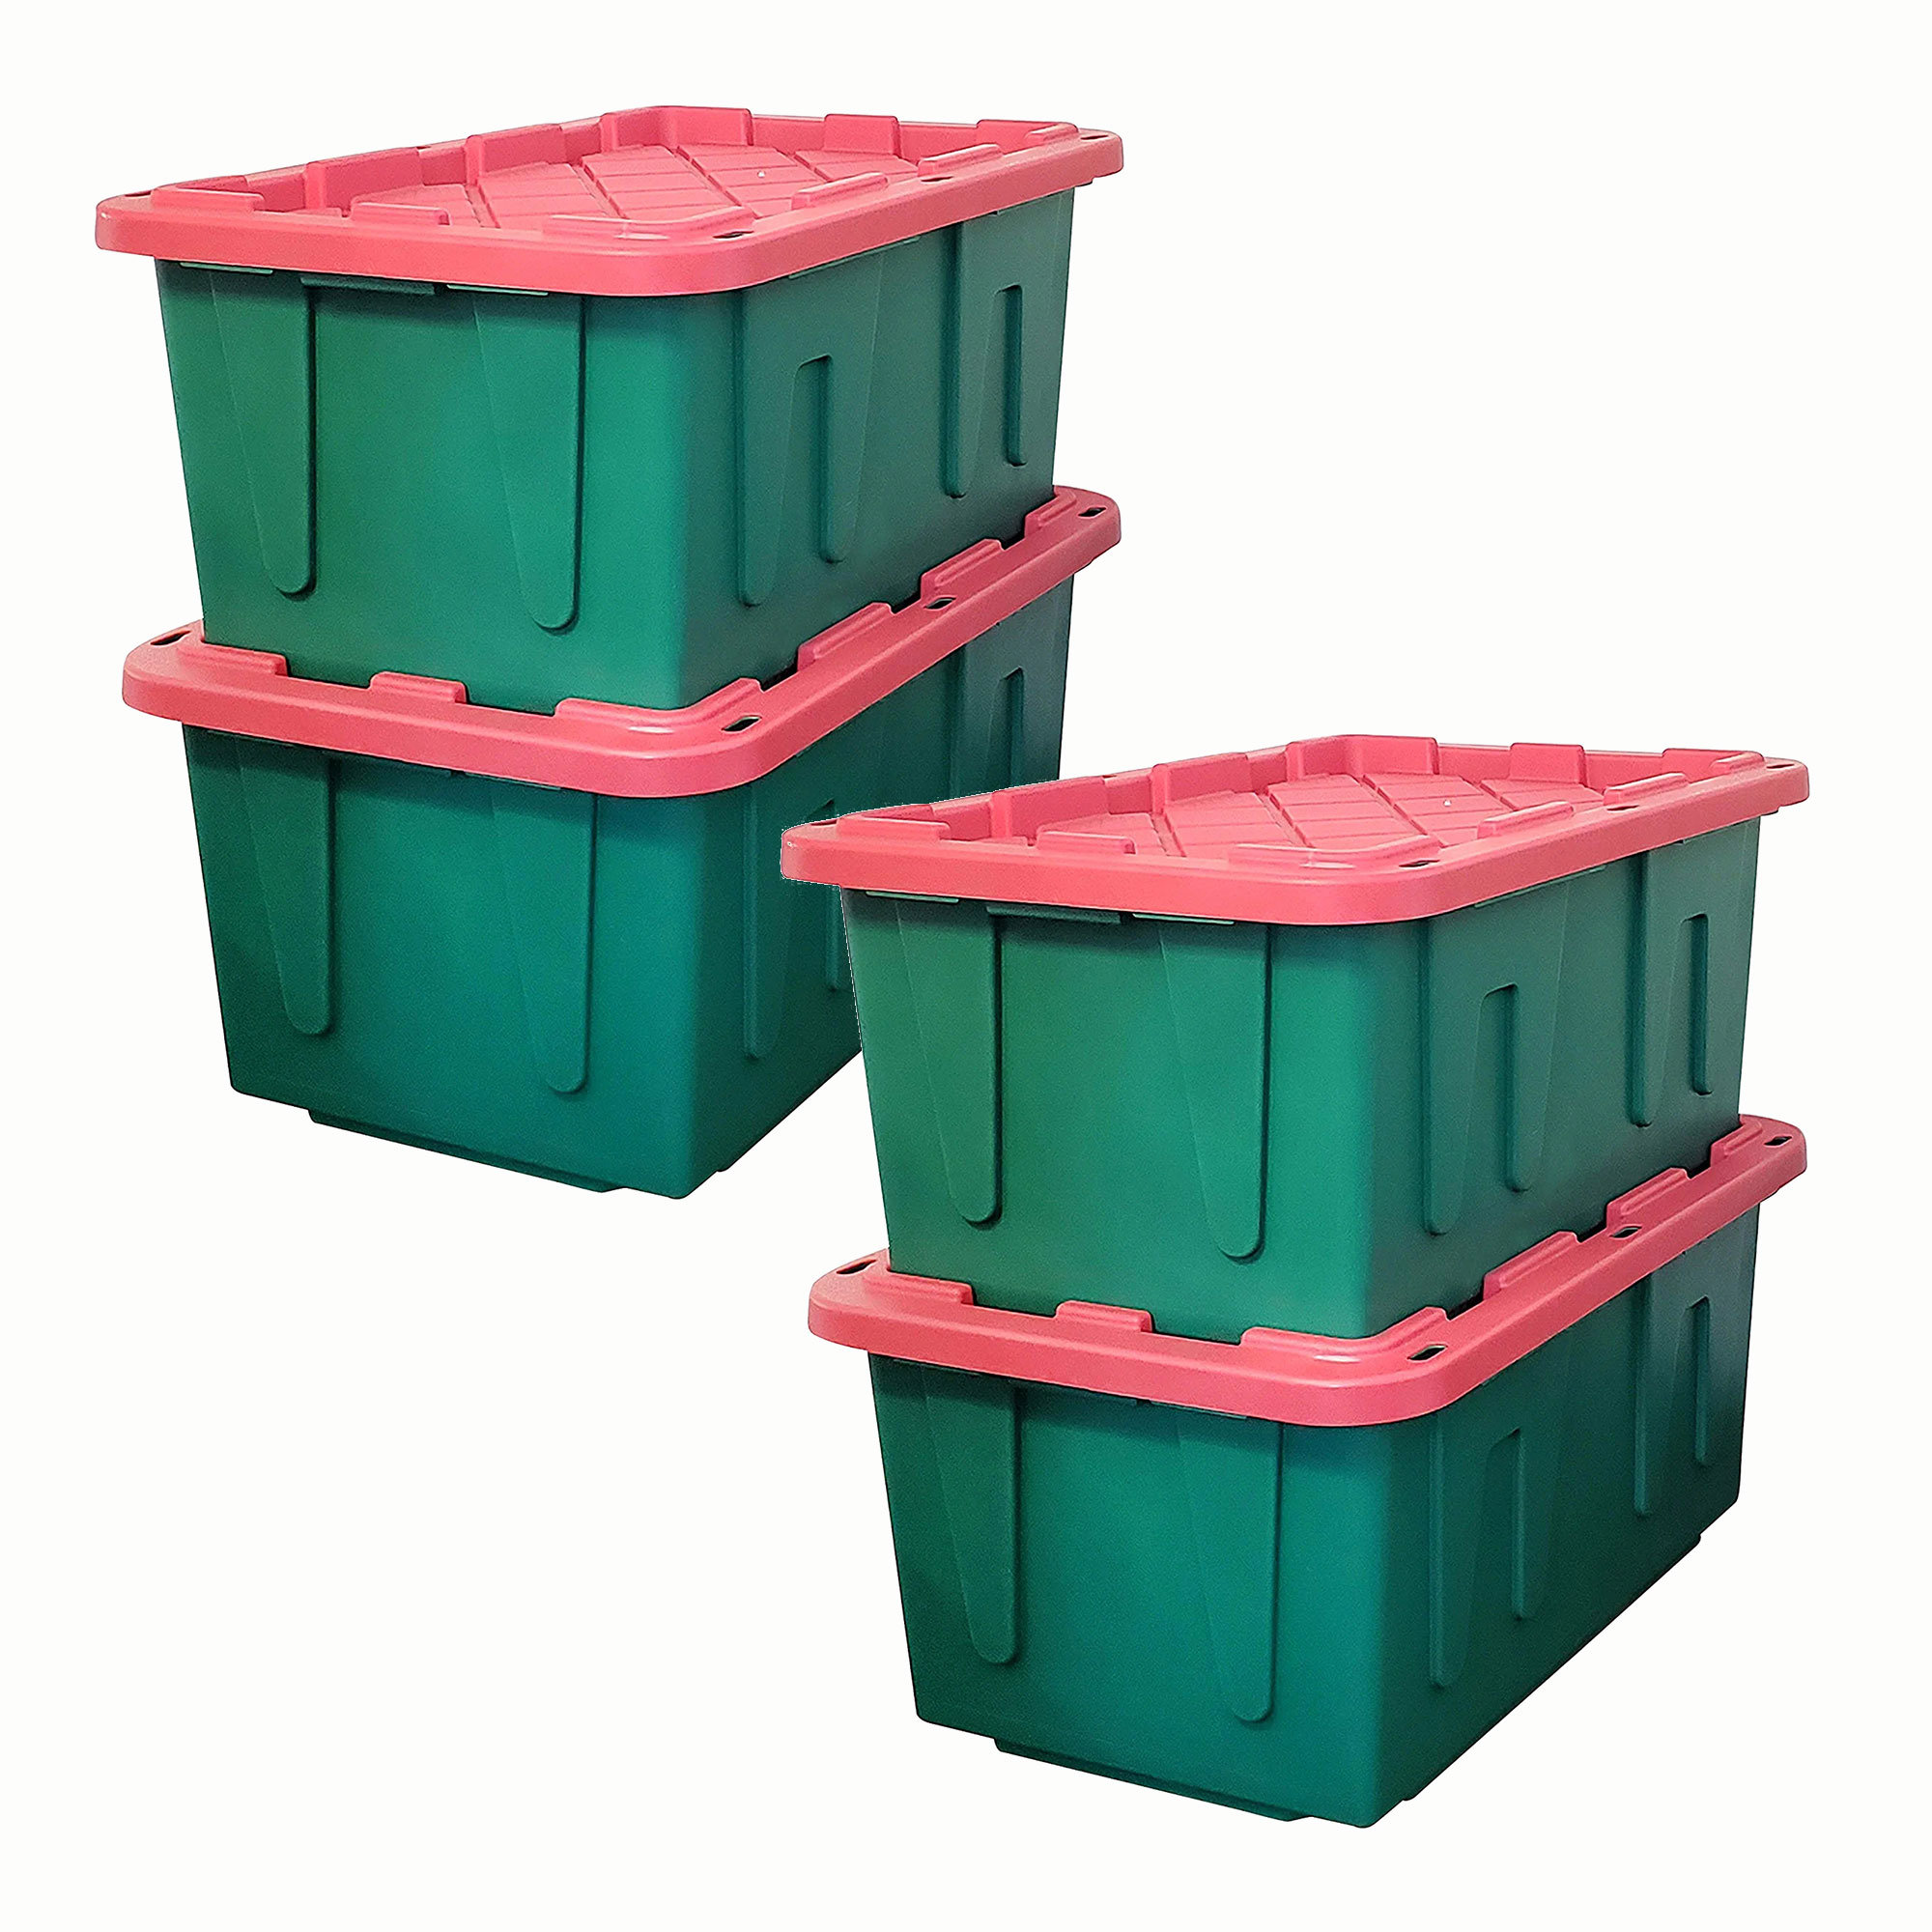 HOMZ Durabilt 27 Gallon Heavy-Duty Holiday Storage Tote, Green/Red (2 Pack)  